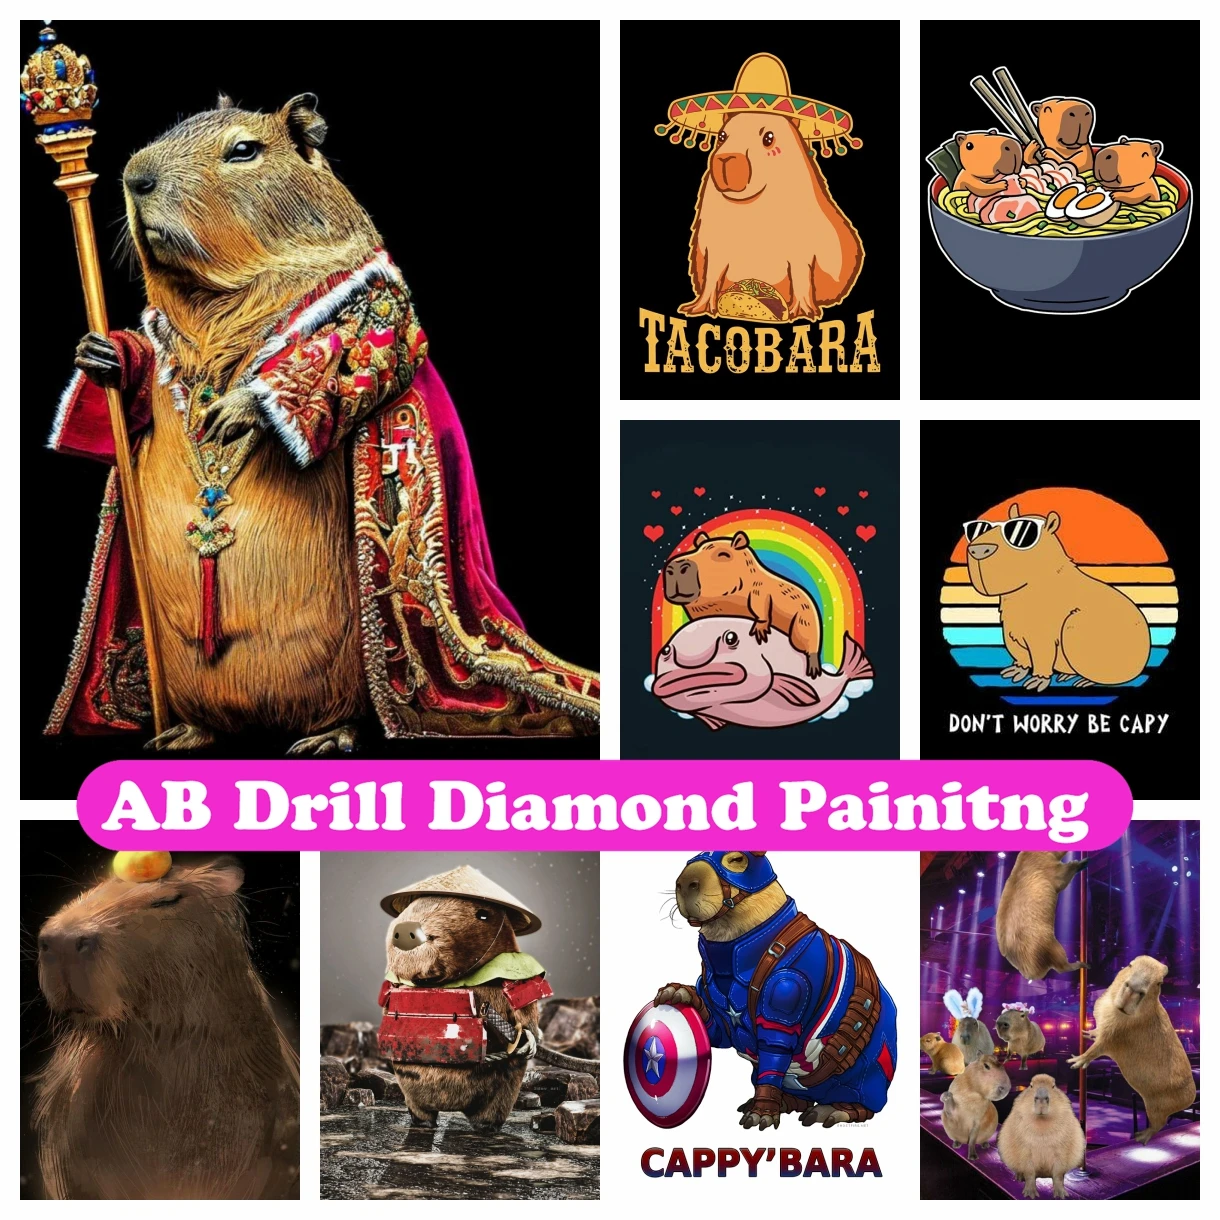 

Cute Capybara 5D DIY AB Diamond Painting Embroidery Animal Cross Stitch Mosaic Handicraft Pictures Craft Home Decor Gift